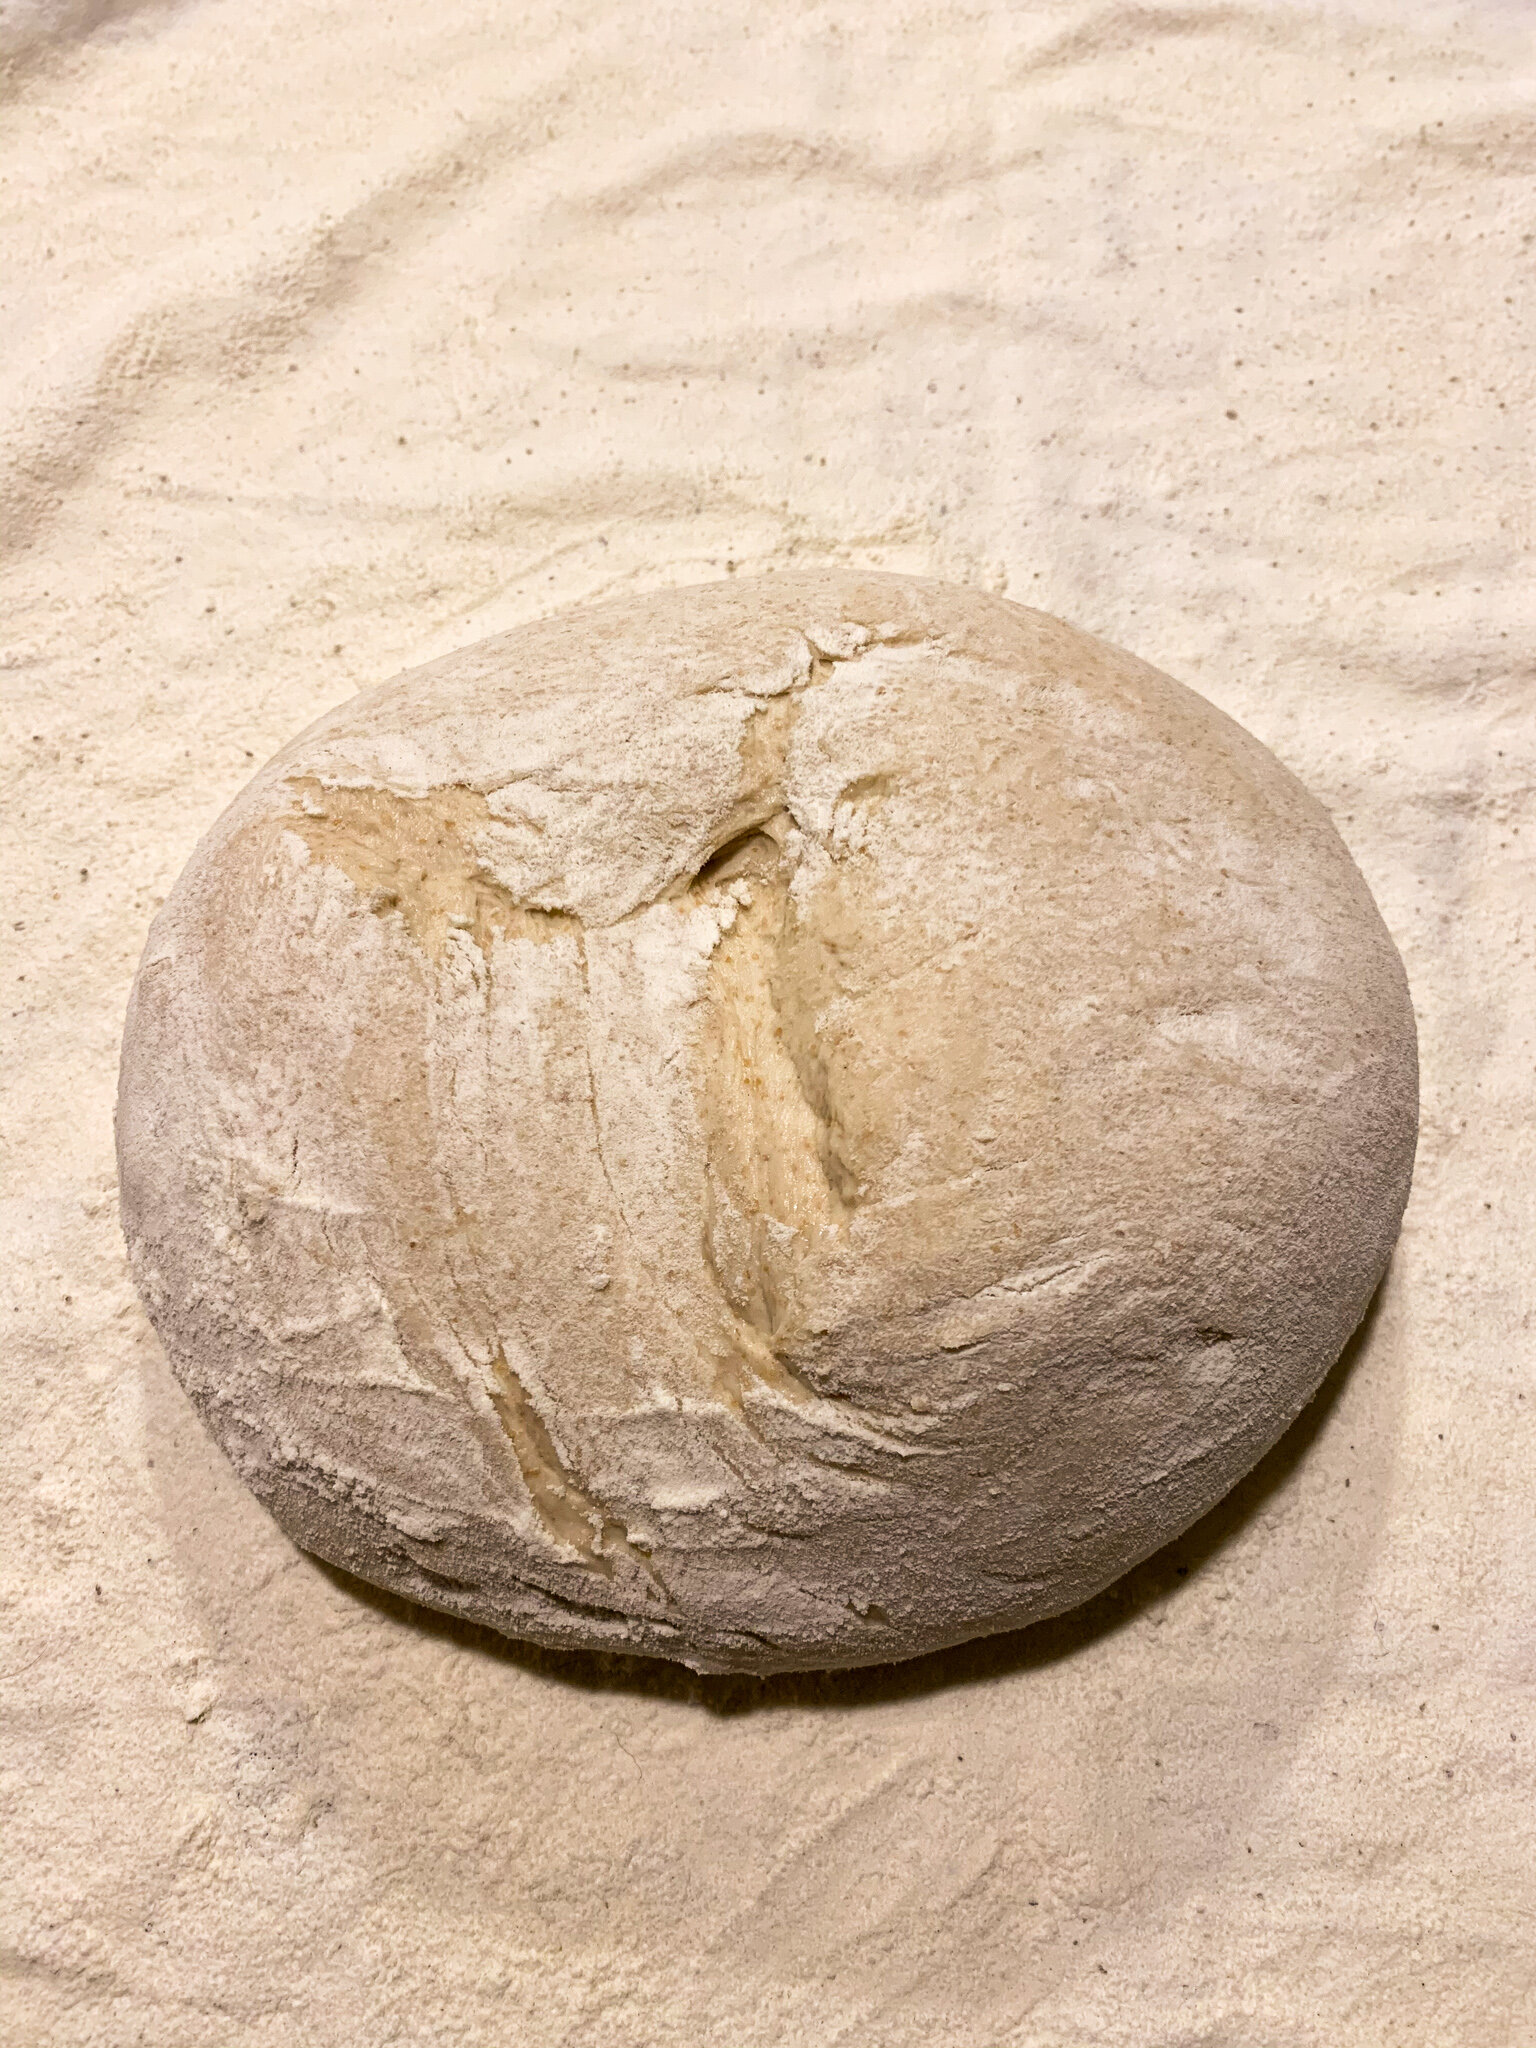 Sourdough Guide: How to Make a Sourdough Loaf Step-by-Step